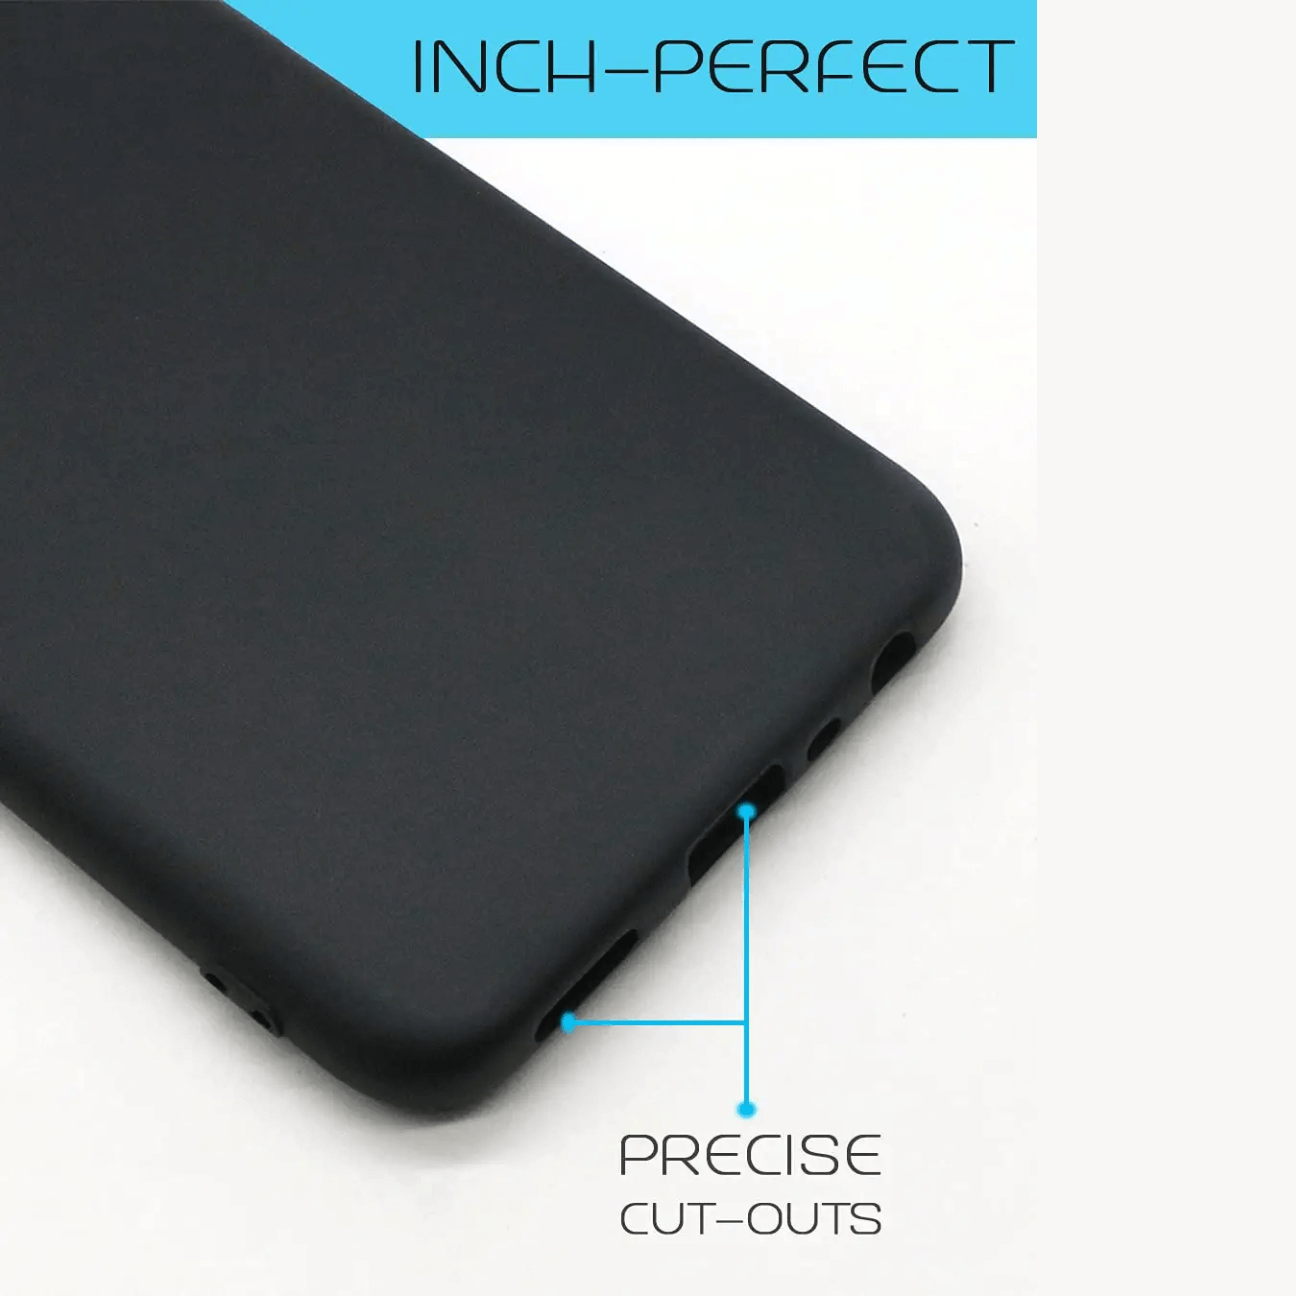 Xiaomi Redmi Y3 Black Soft Silicone Phone Case Image